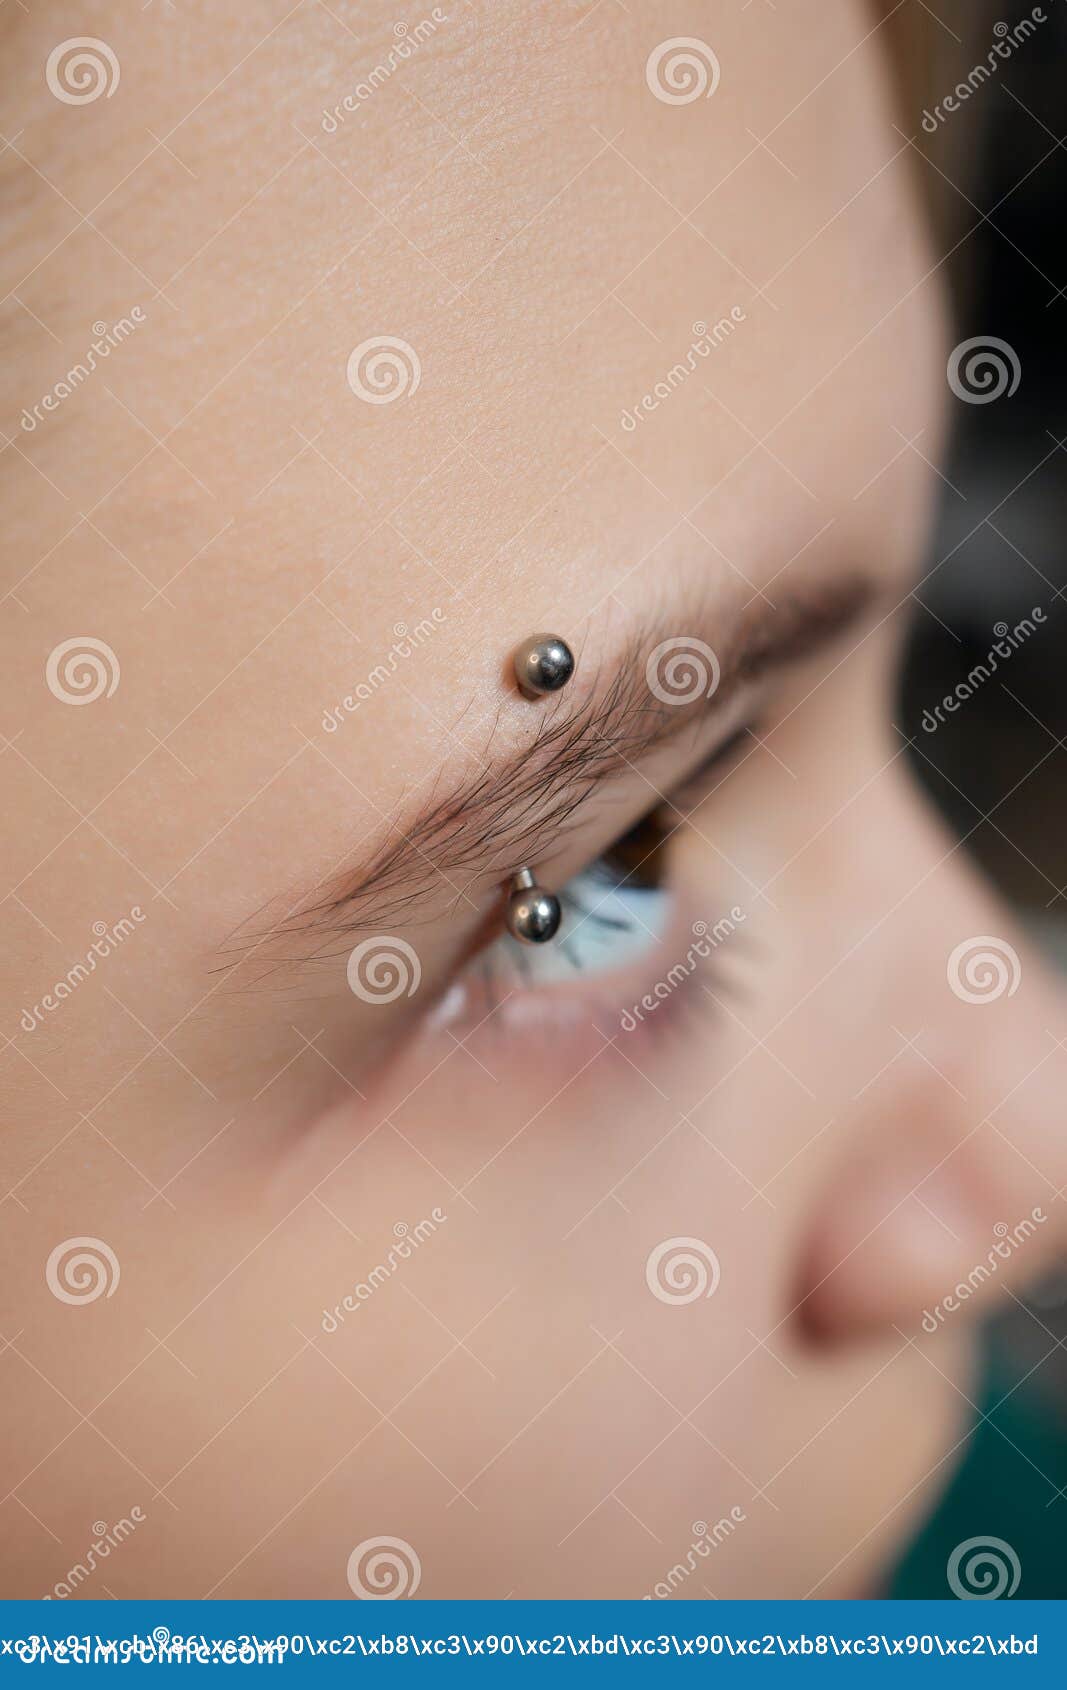 Smile Or Frenulum Piercing Under The Upper Lip Stock Photo Image Of